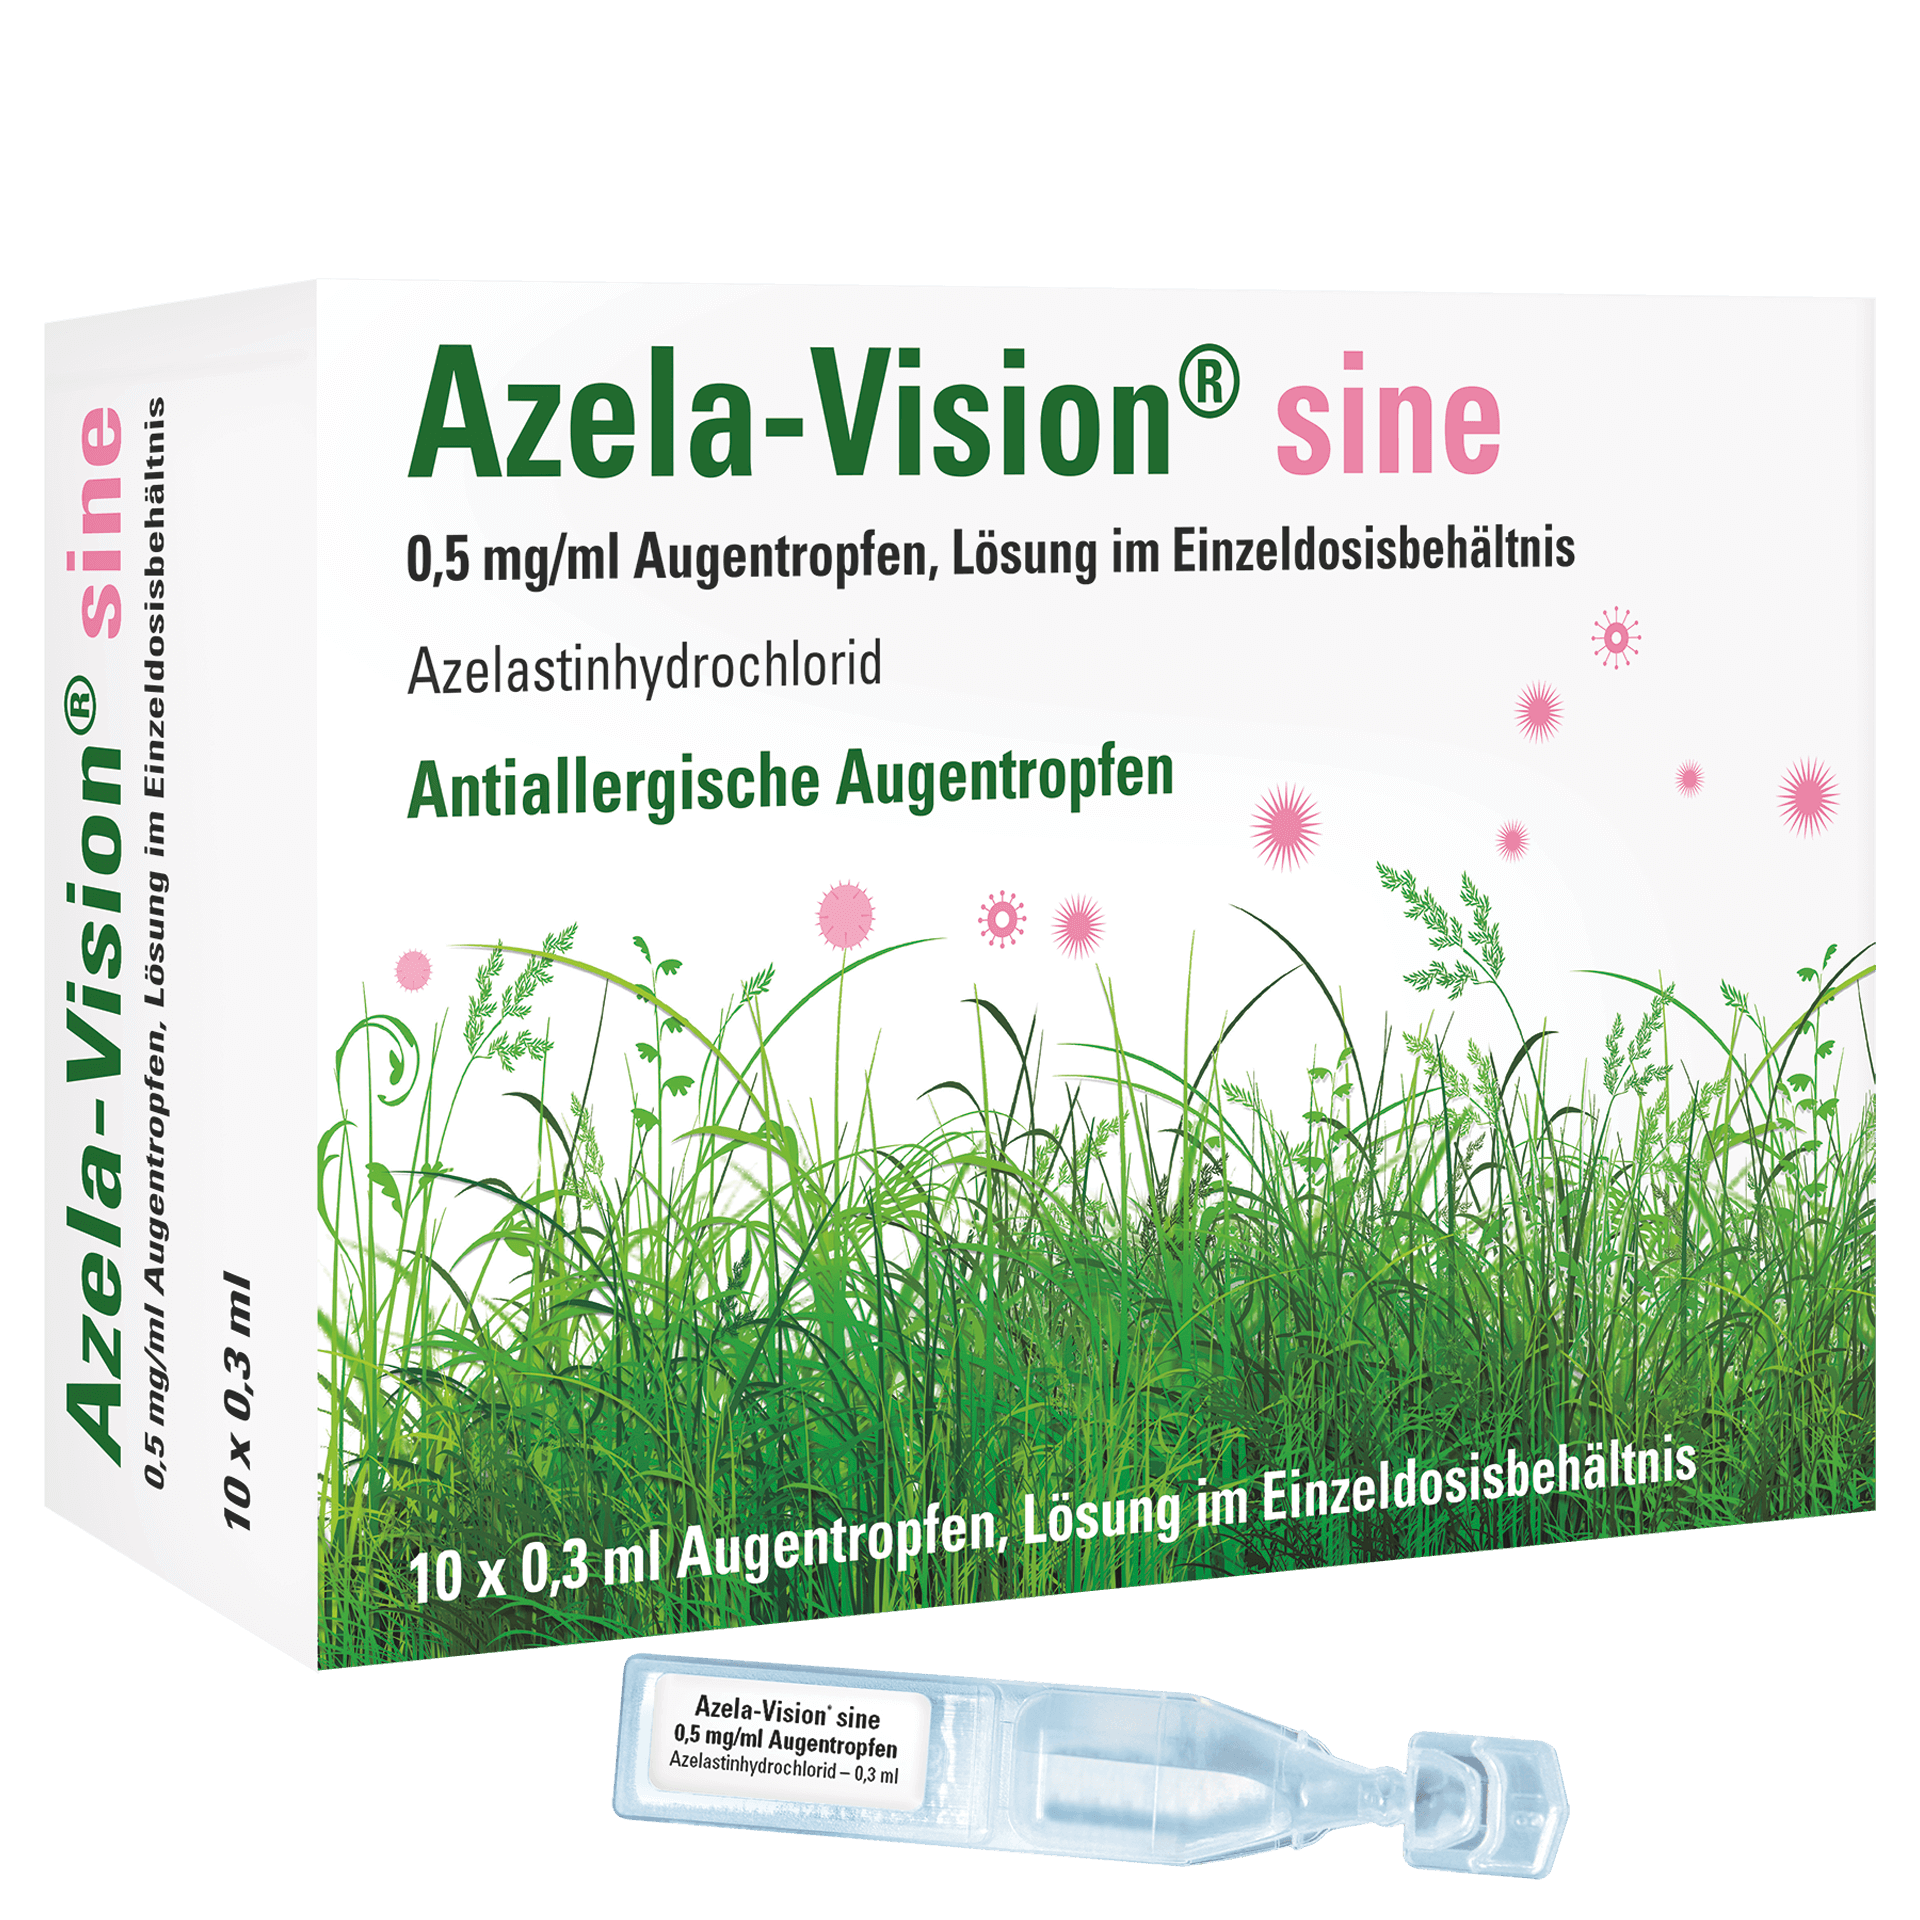 Azela-Vision® sine